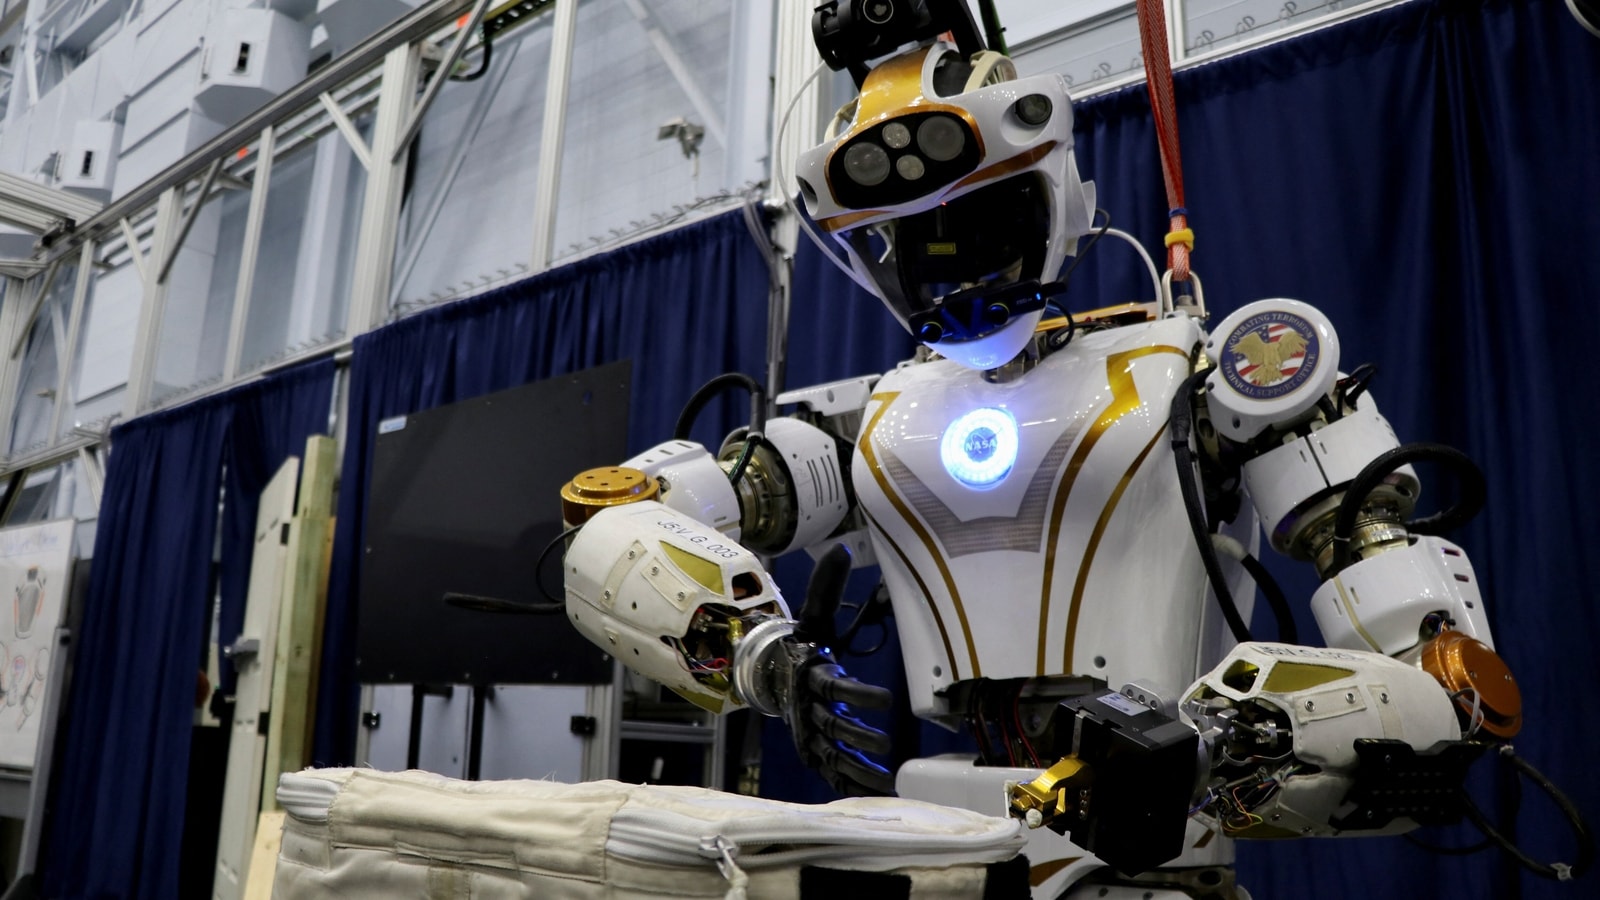 Humanoid robots in space - The next frontier: Meet NASA's humanoid robot Valkyrie